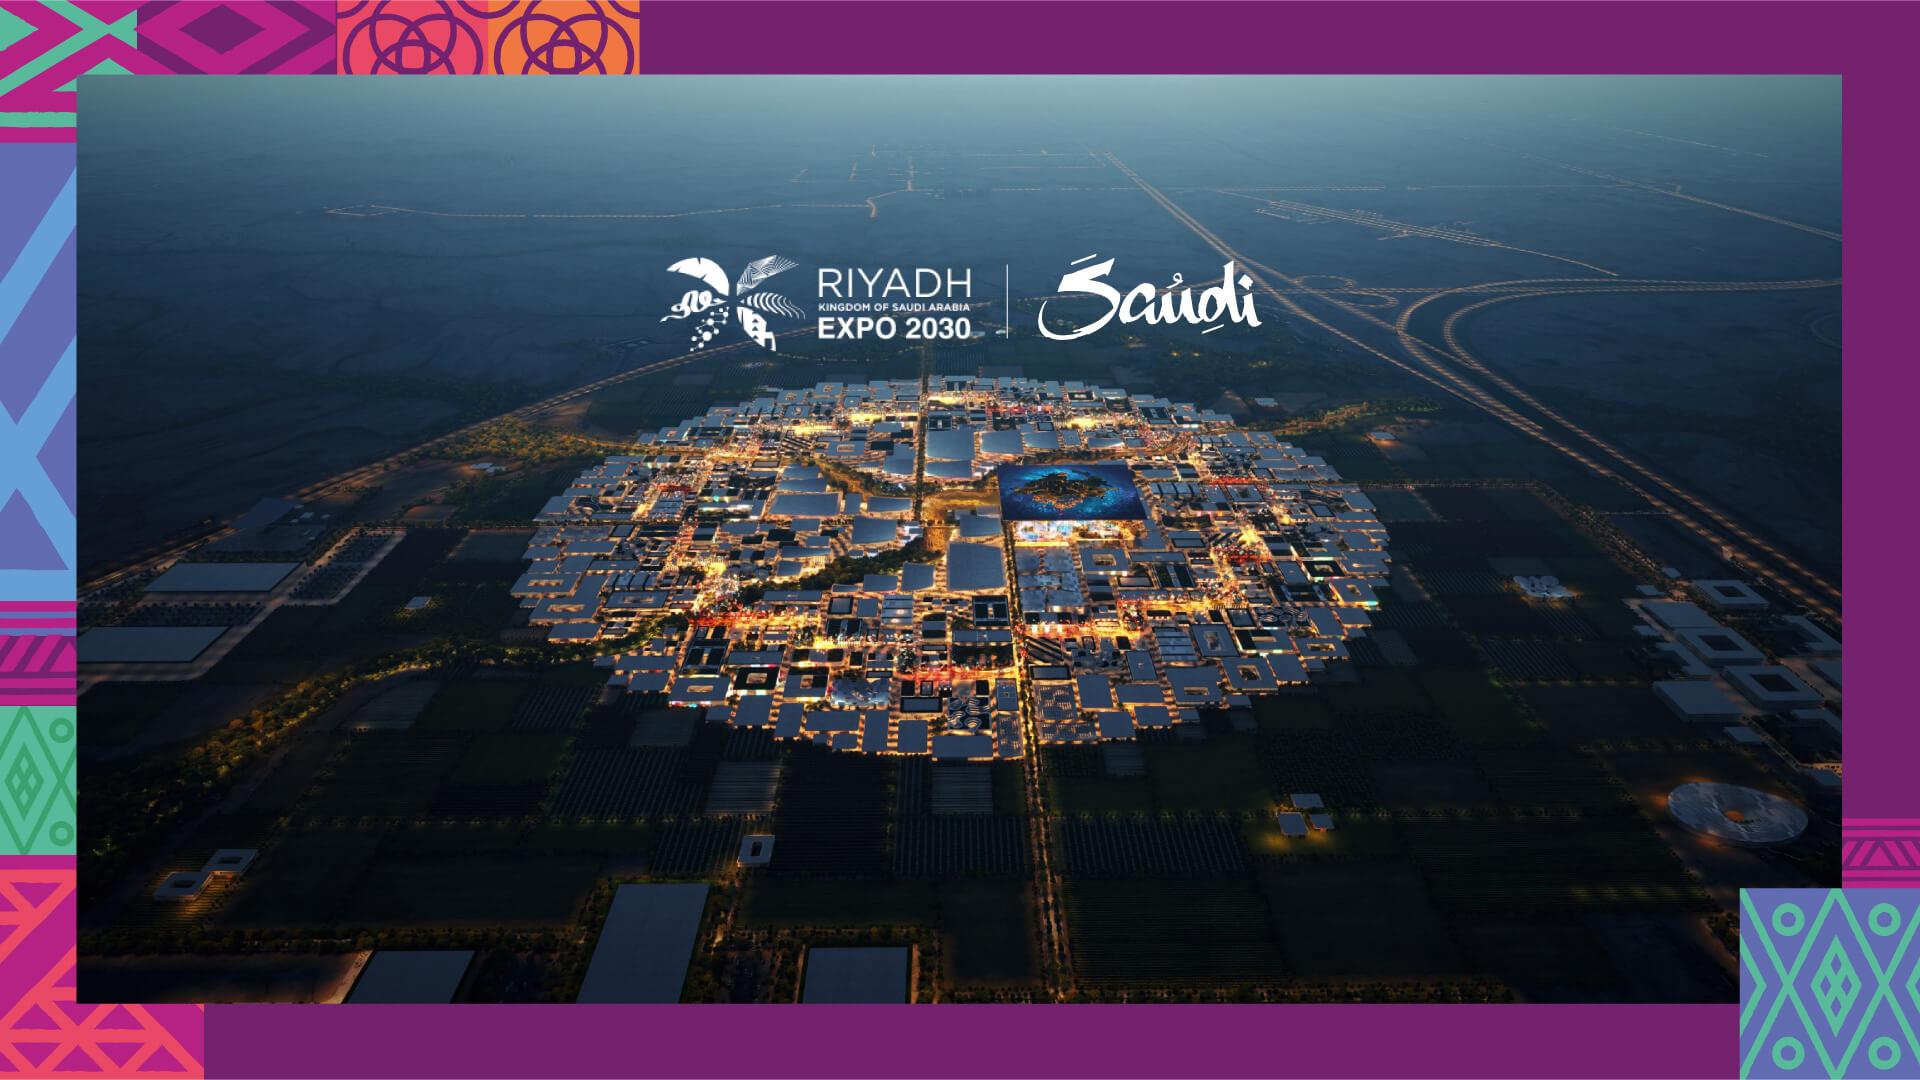 Saudi Arabia to Host Expo 2030 in Riyadh, Unveiling 'The Era of Change'